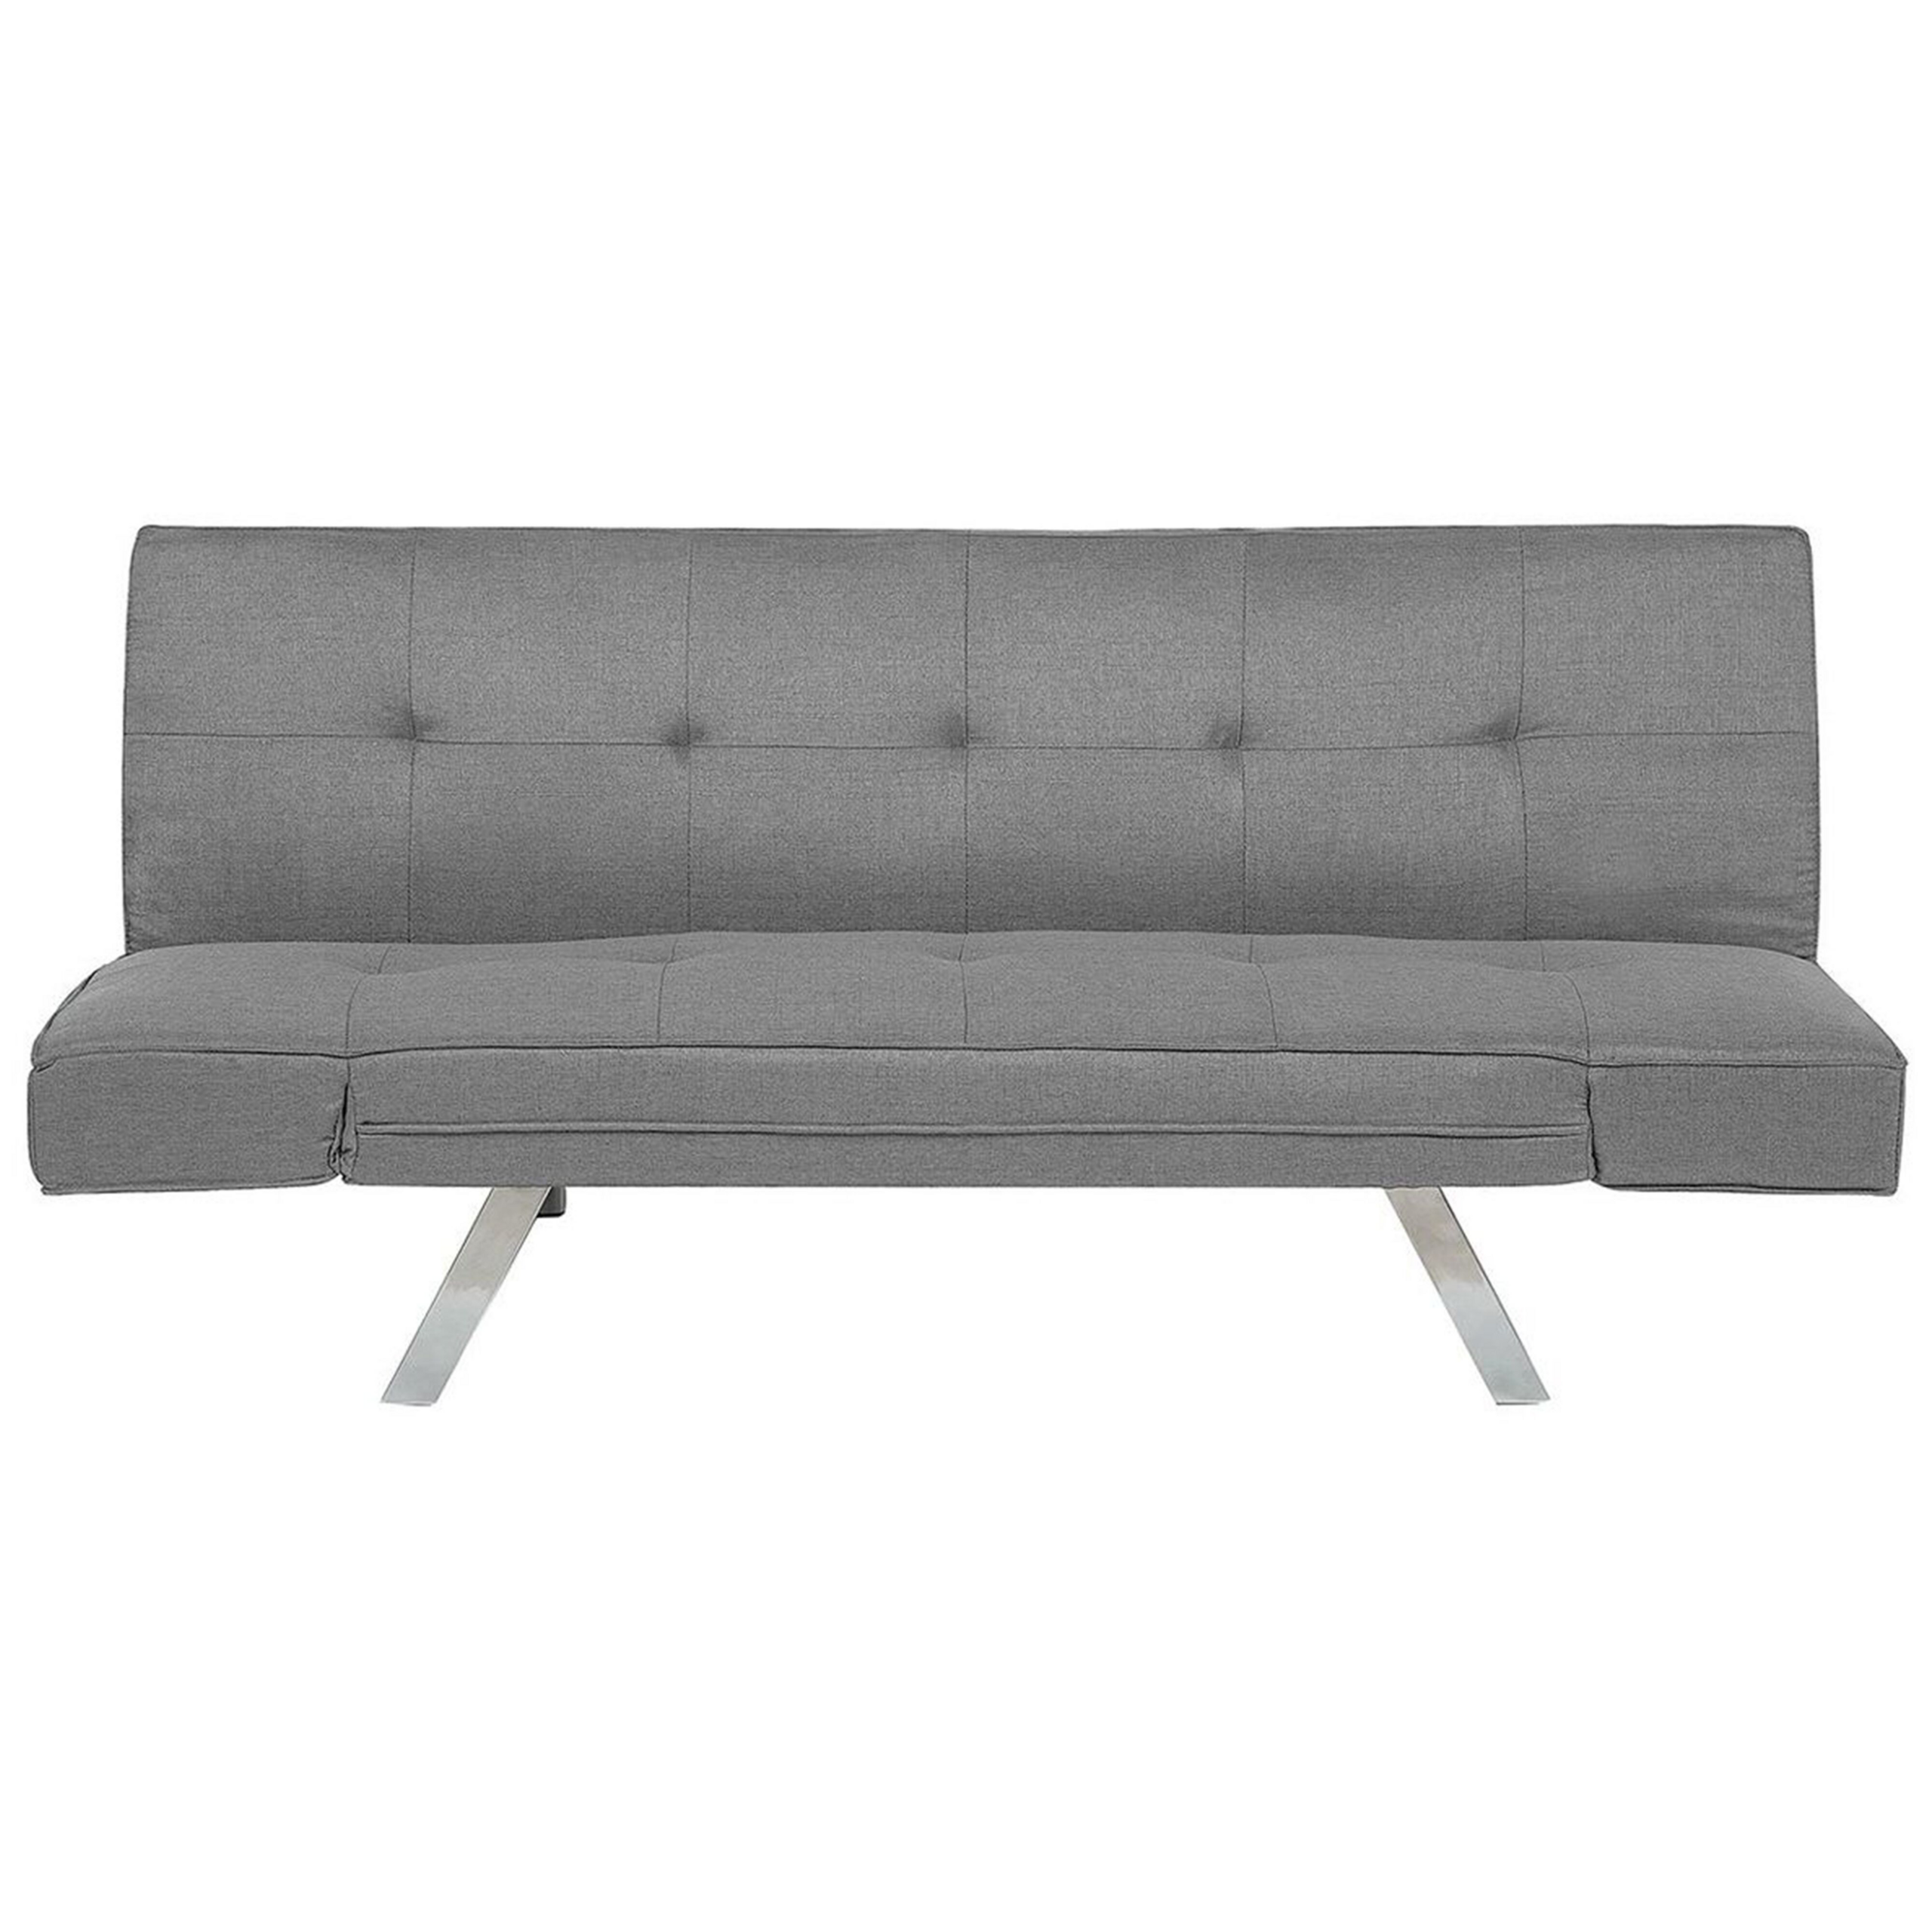 Beliani 3 Seater Sofa Bed Light Grey Upholstered Armless Modern